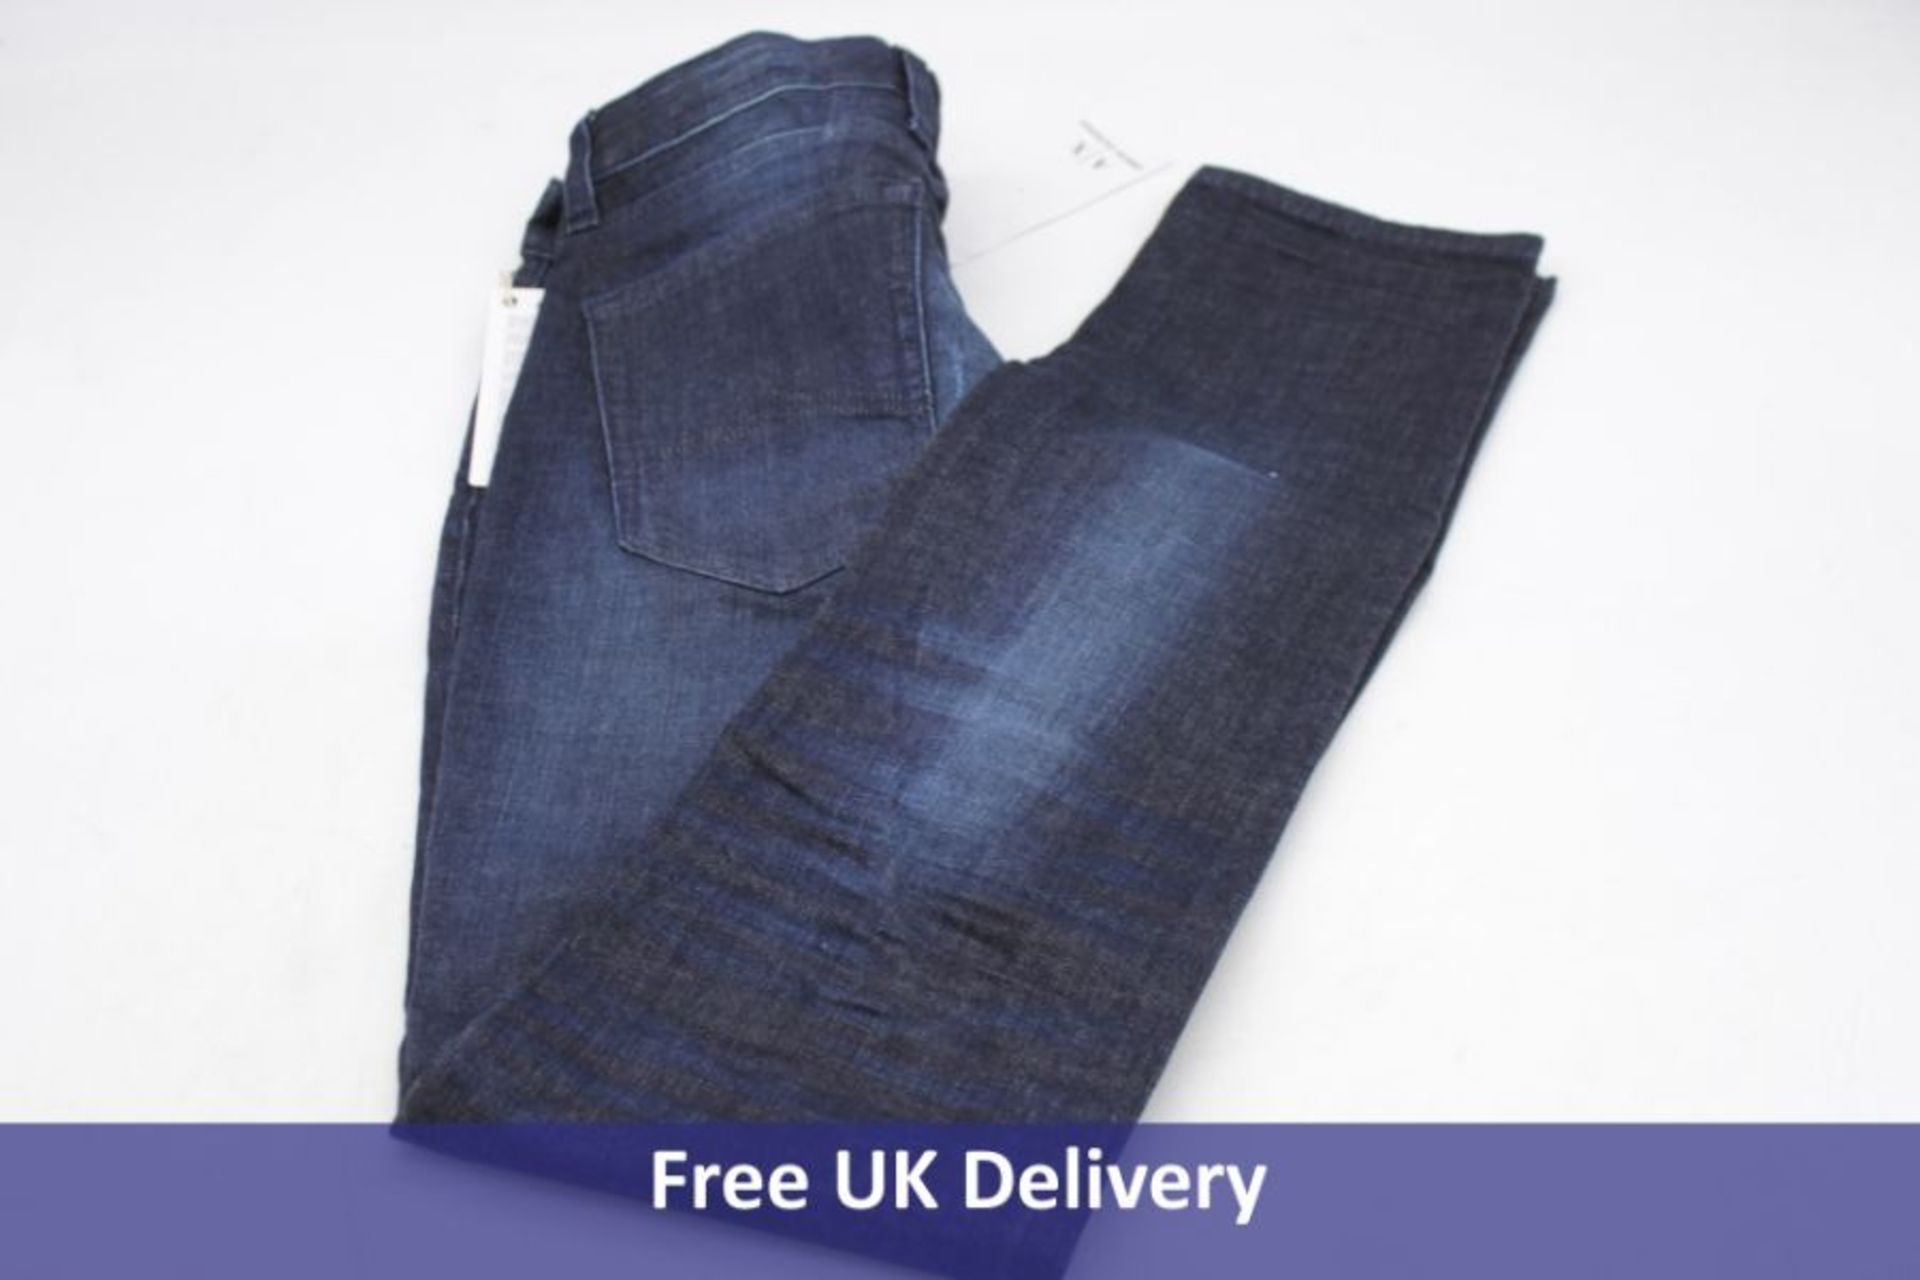 Two Armani Exchange Men's Tapered Fit Jeans, Indigo, 1x 28W 32L, 1x 29W 32L - Image 2 of 2